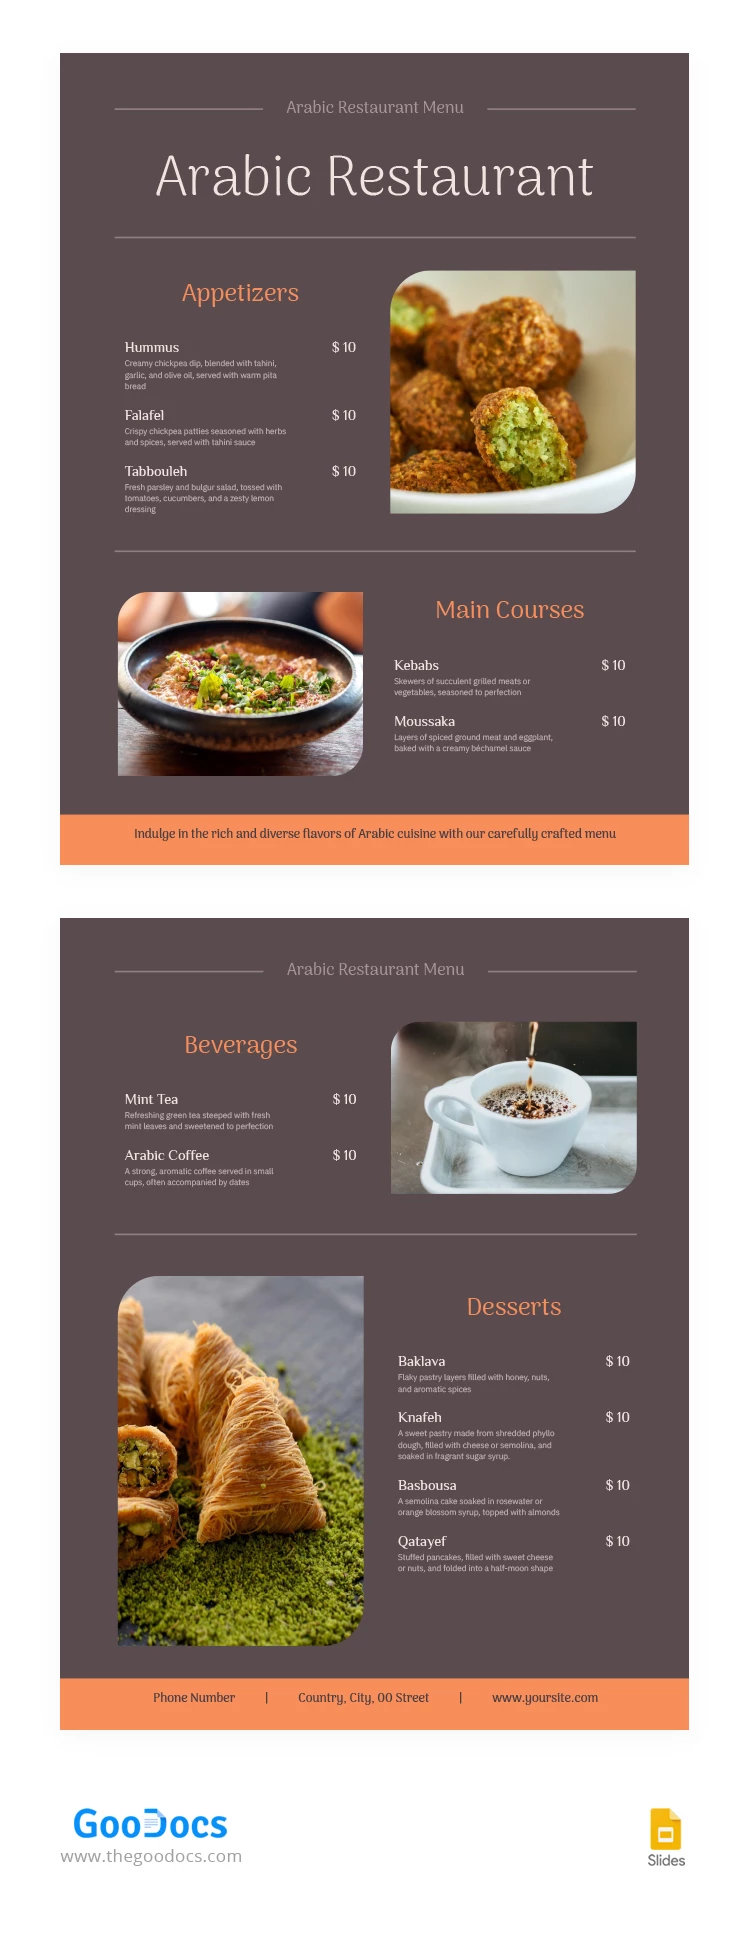 Menu du restaurant arabe - free Google Docs Template - 10067228